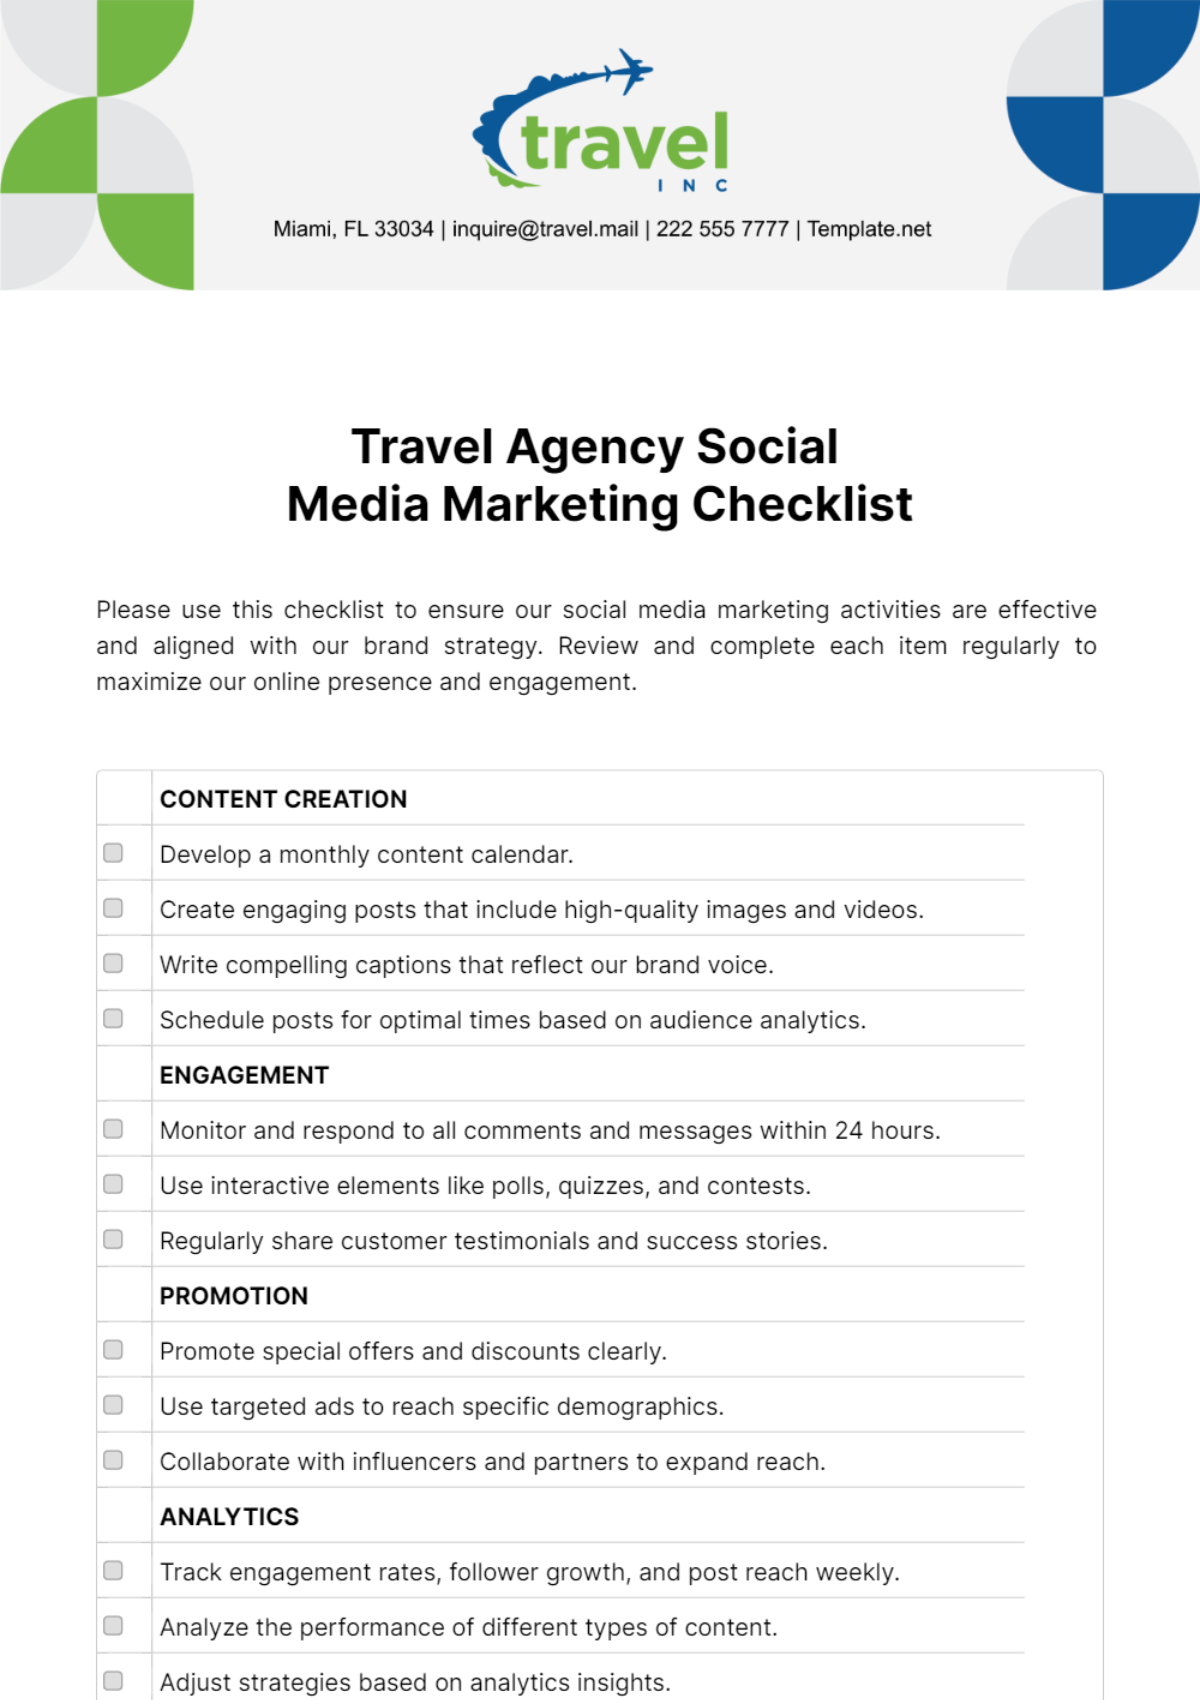 Travel Agency Social Media Marketing Checklist Template